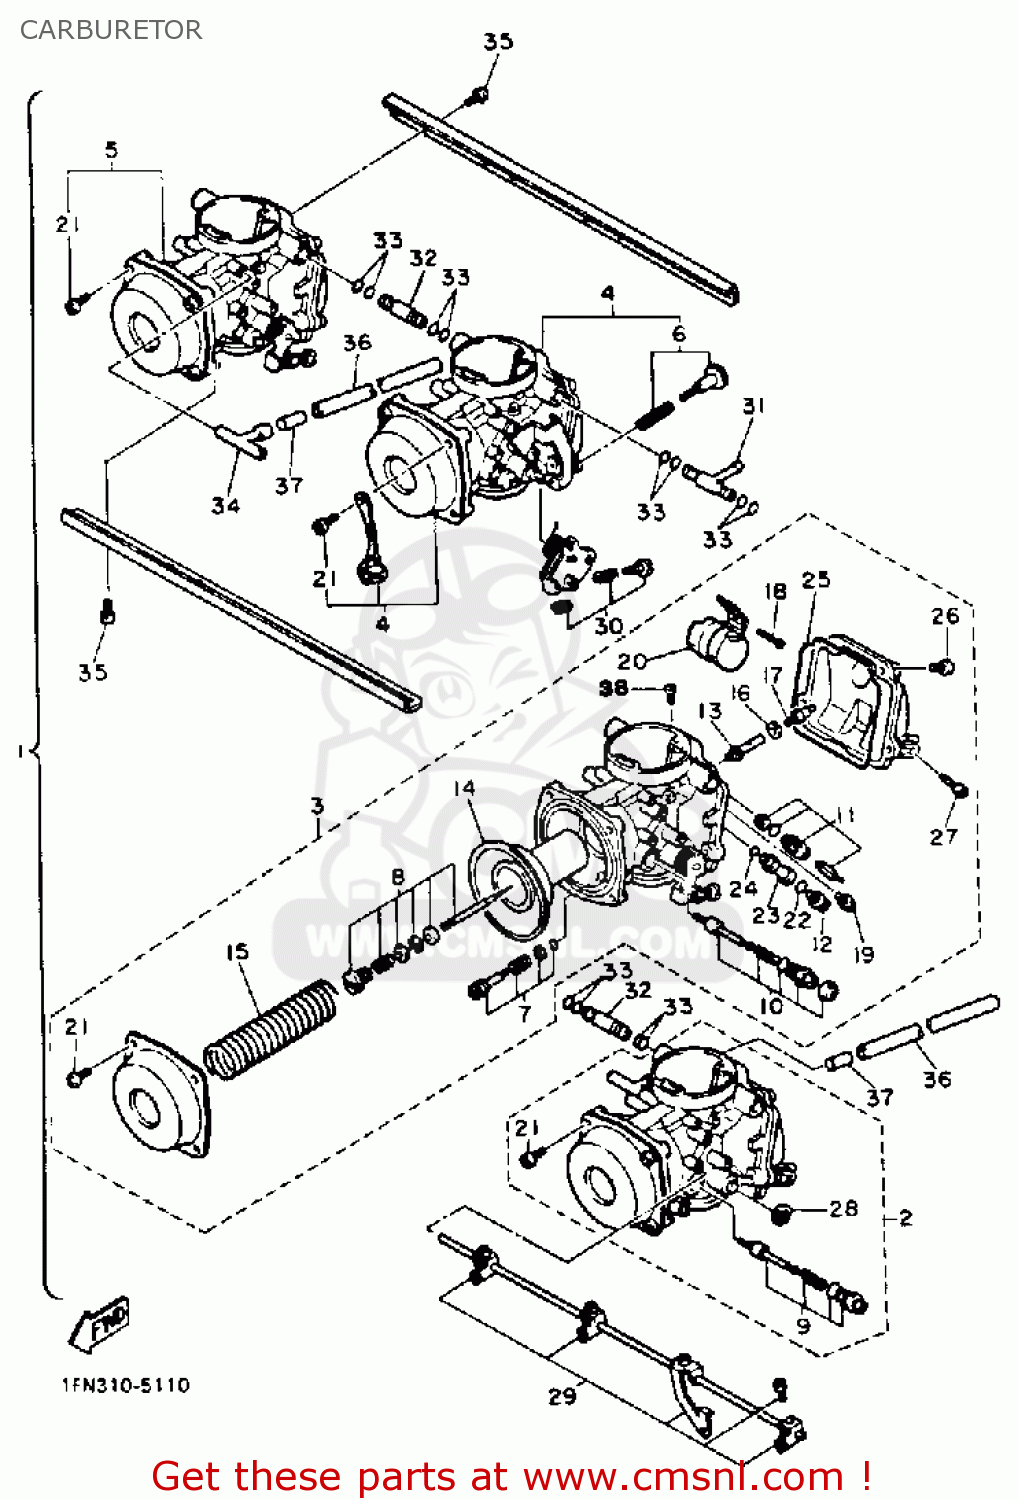 yamaha grizzly 660 carburetor diagram